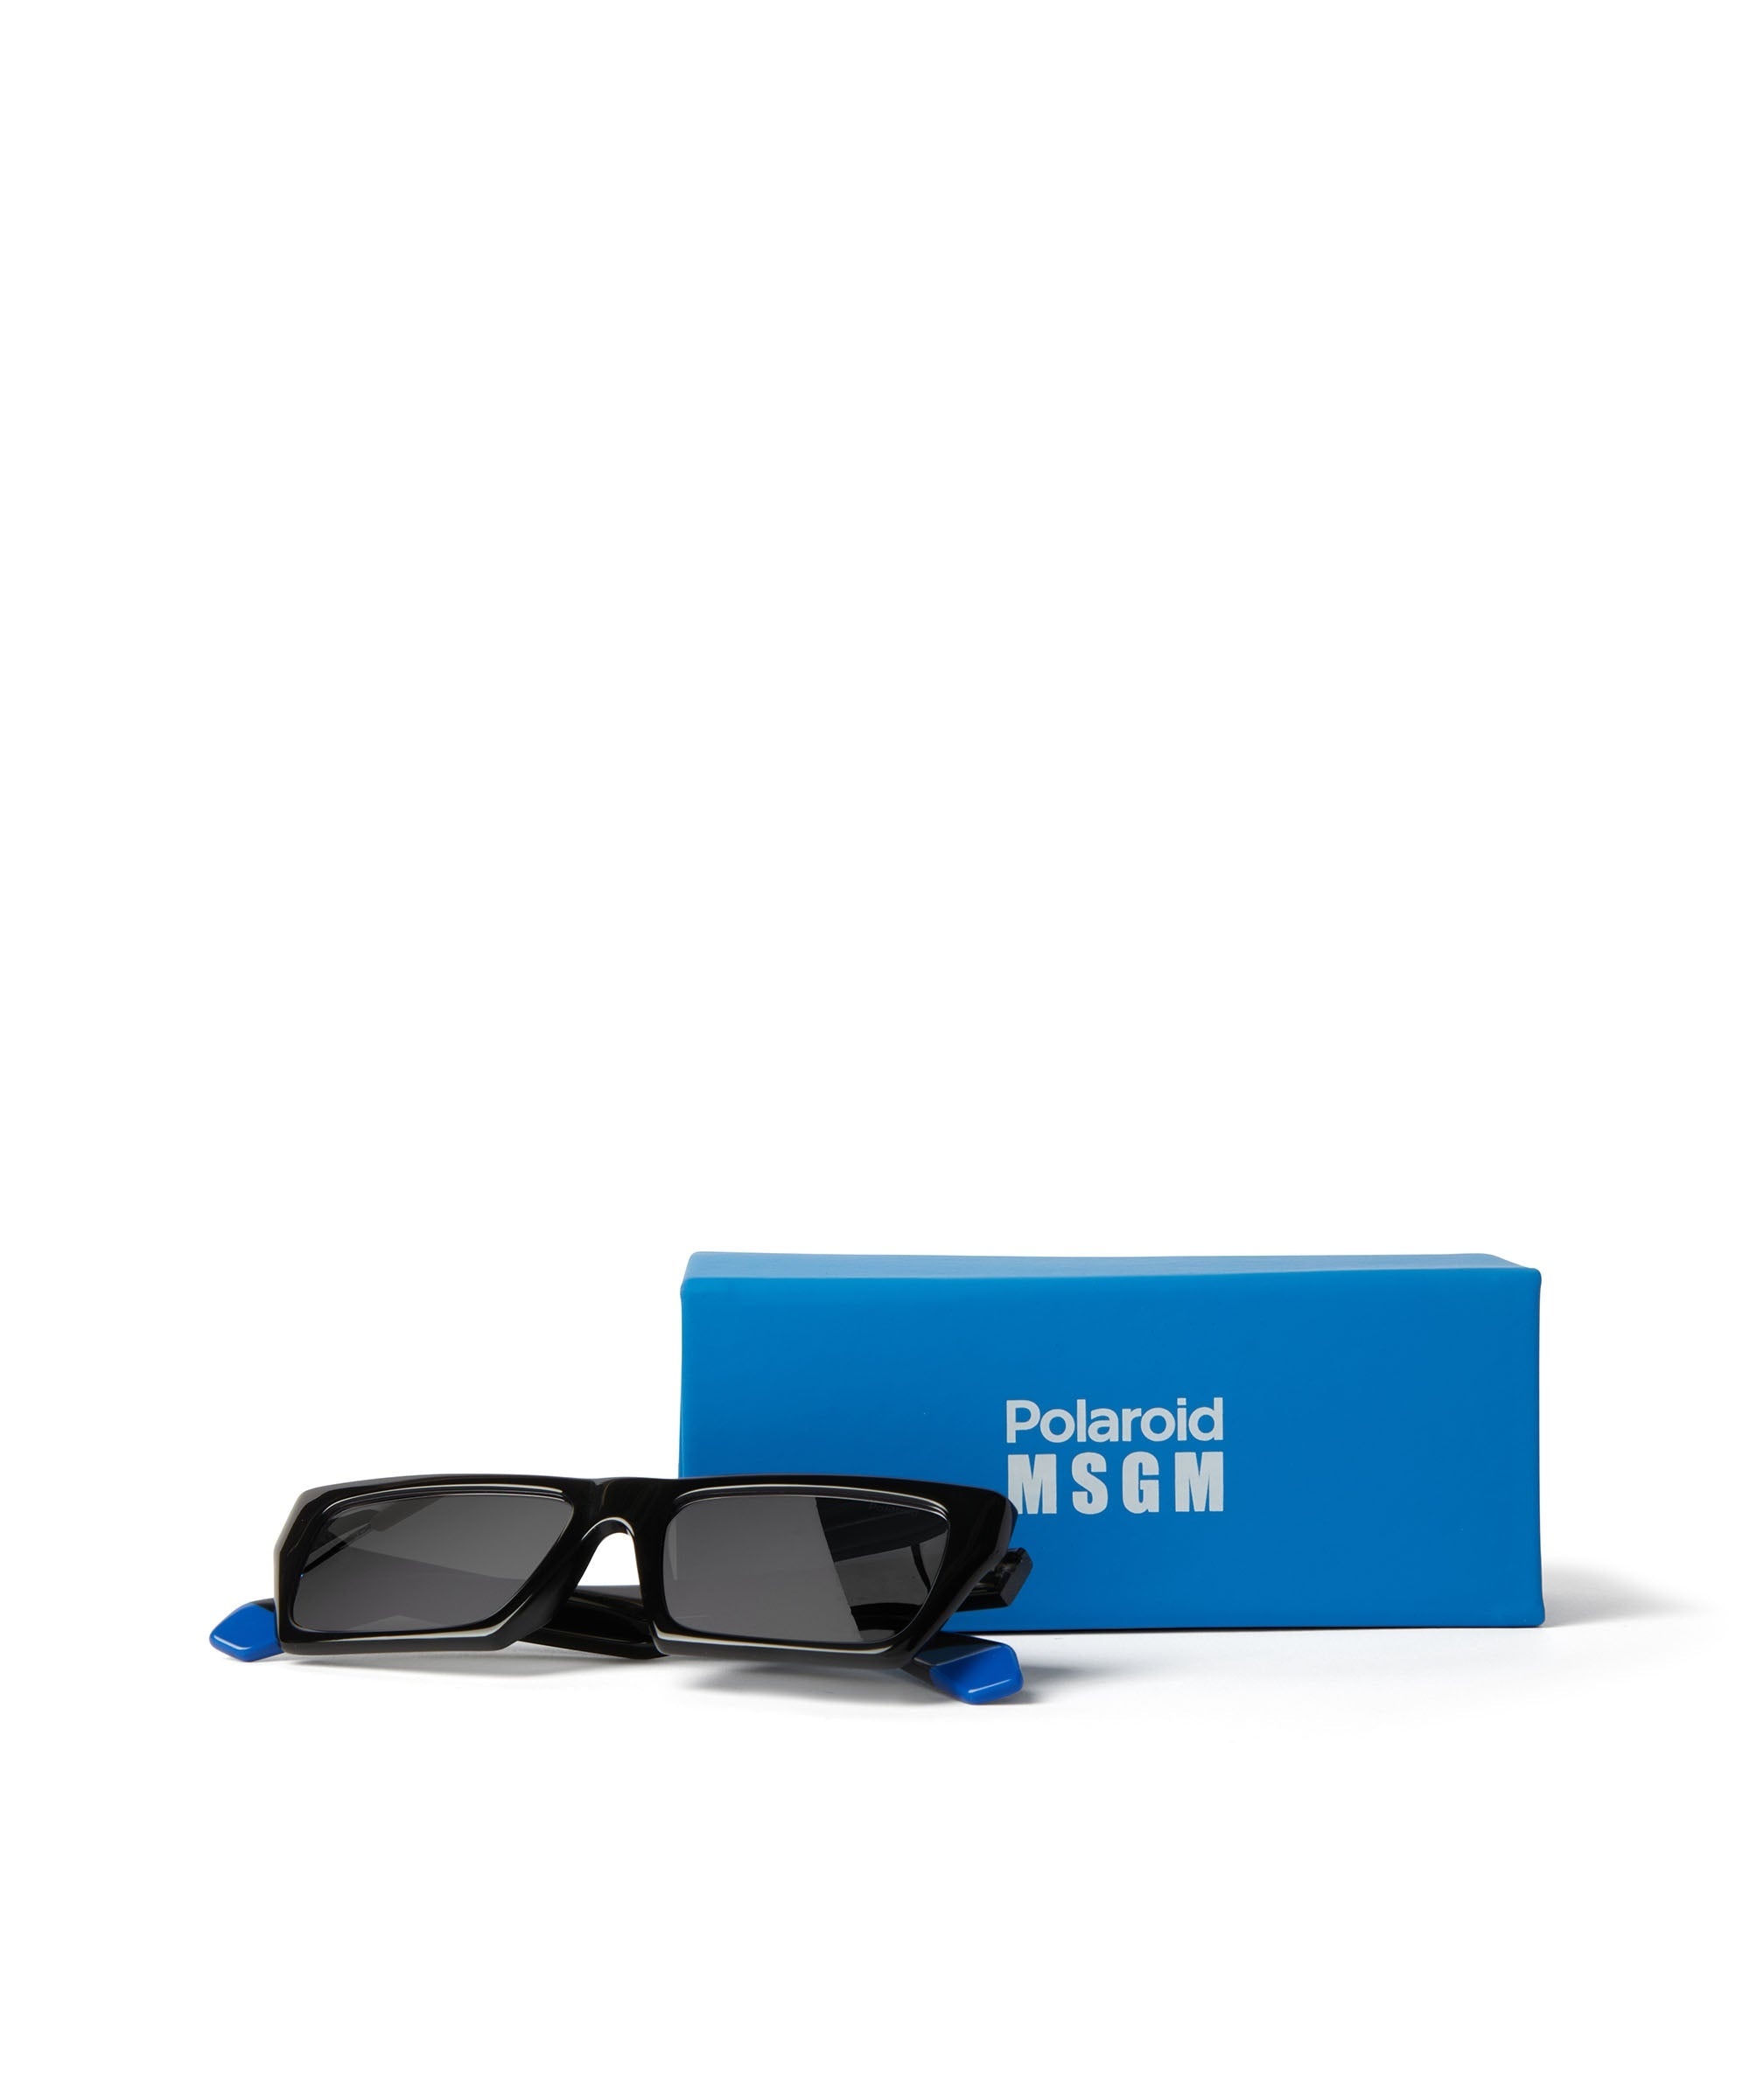 Mirrored sunglasses in Polaroid acetate for MSGM - 2